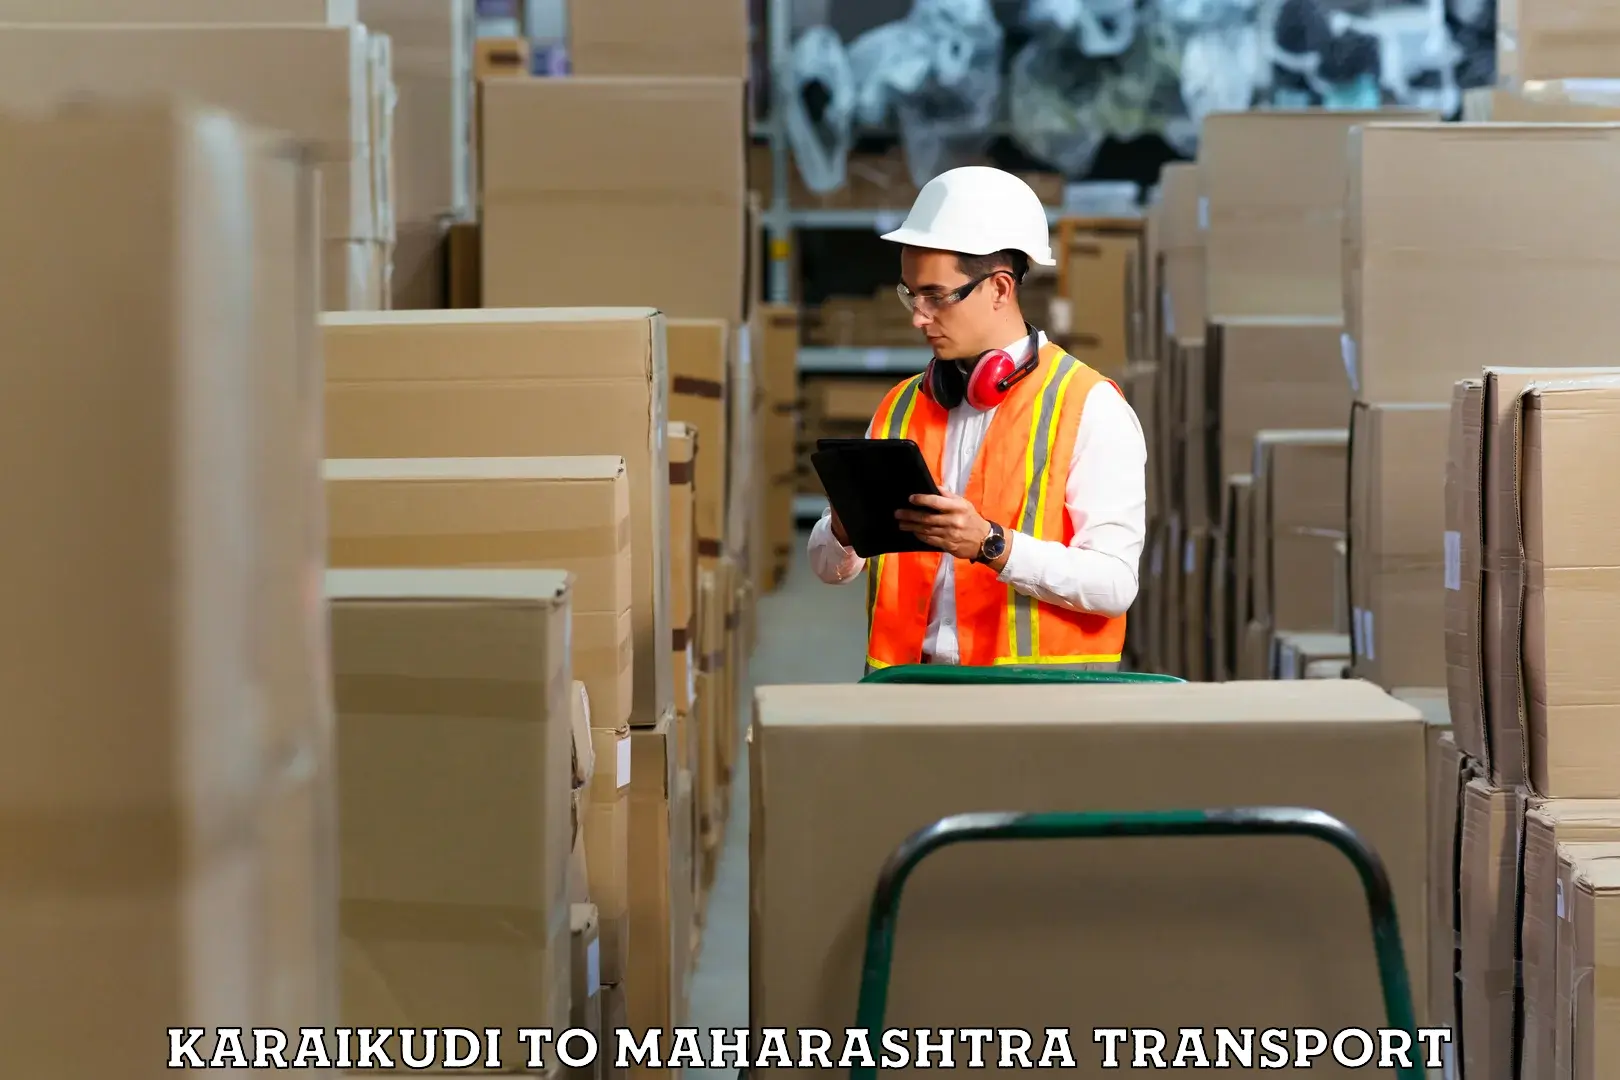 Truck transport companies in India Karaikudi to Aurangabad